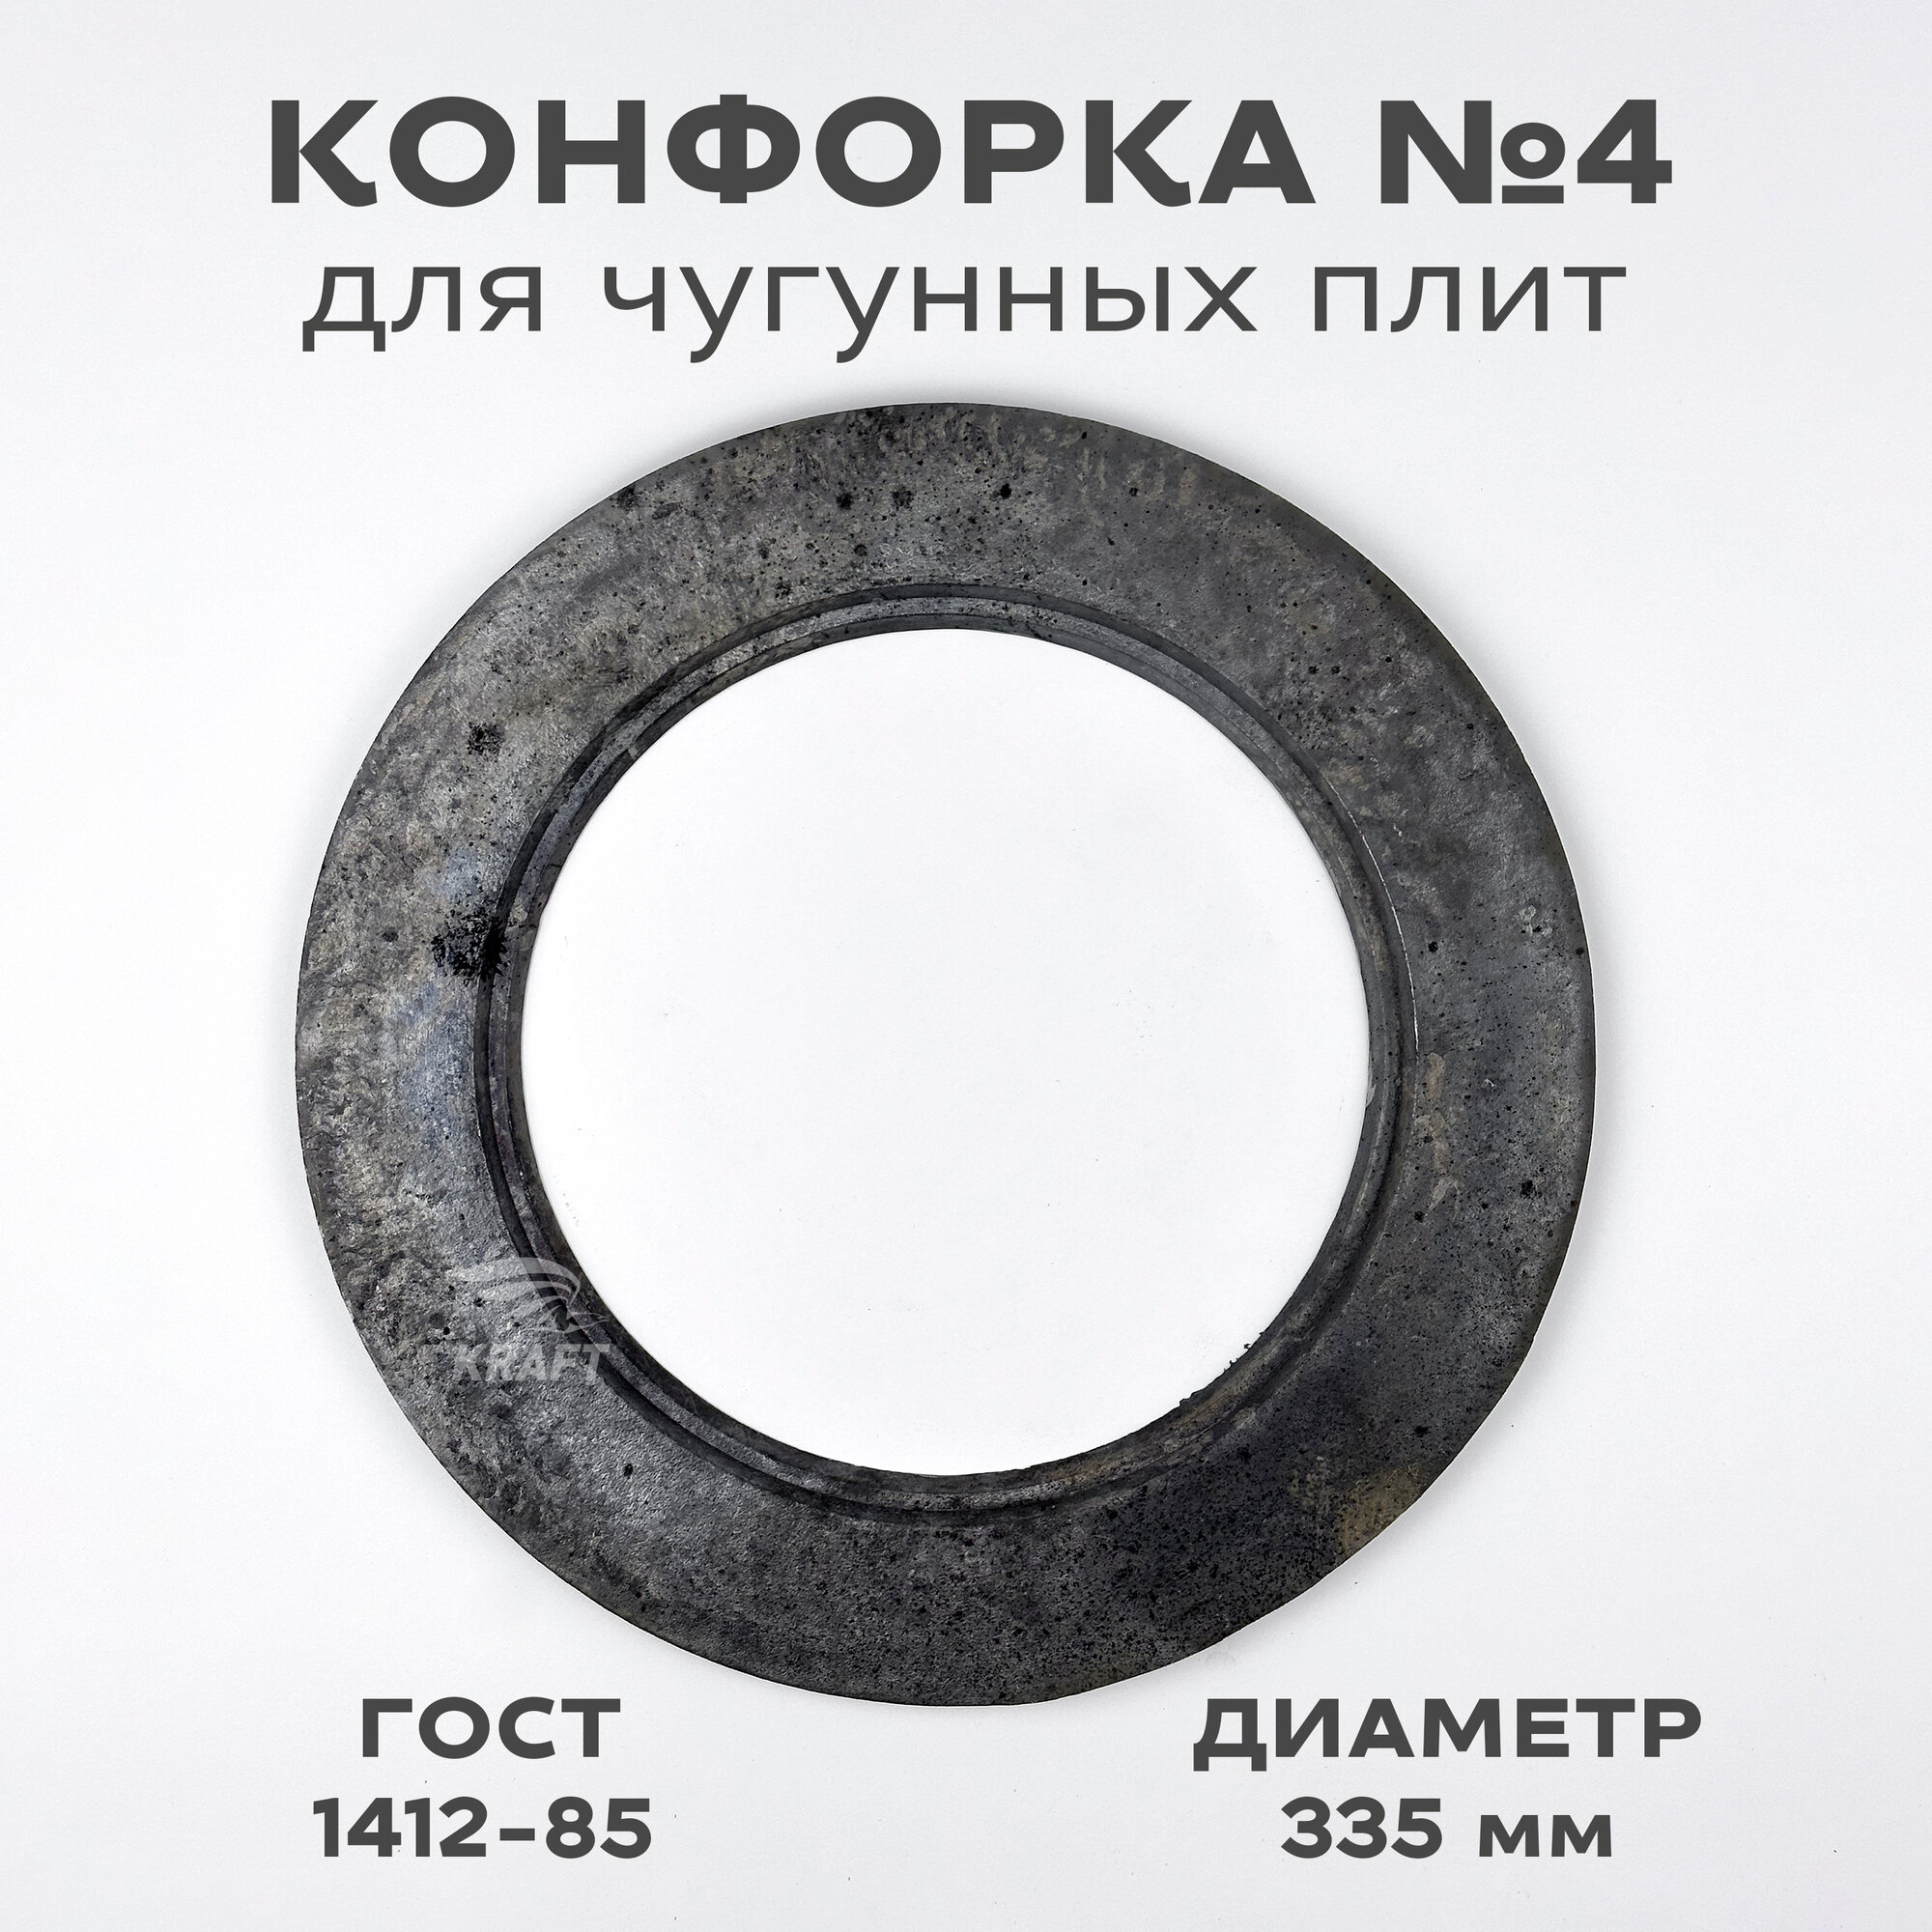 Конфорка №4 от плиты П2-5 кольцо для чугунных плит диаметр 300 мм